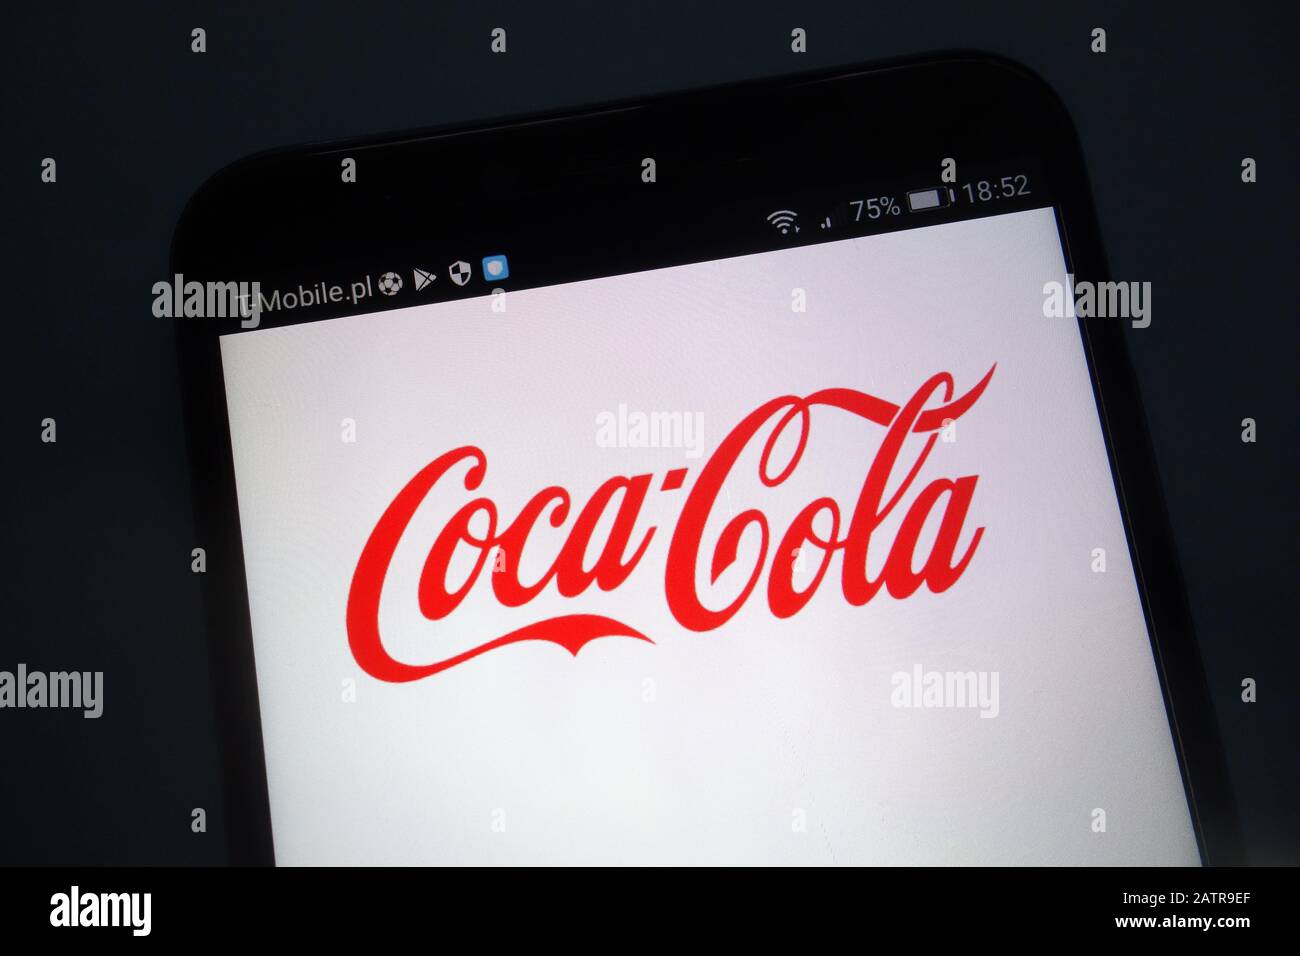 Coca-Cola logo on smartphone Stock Photo